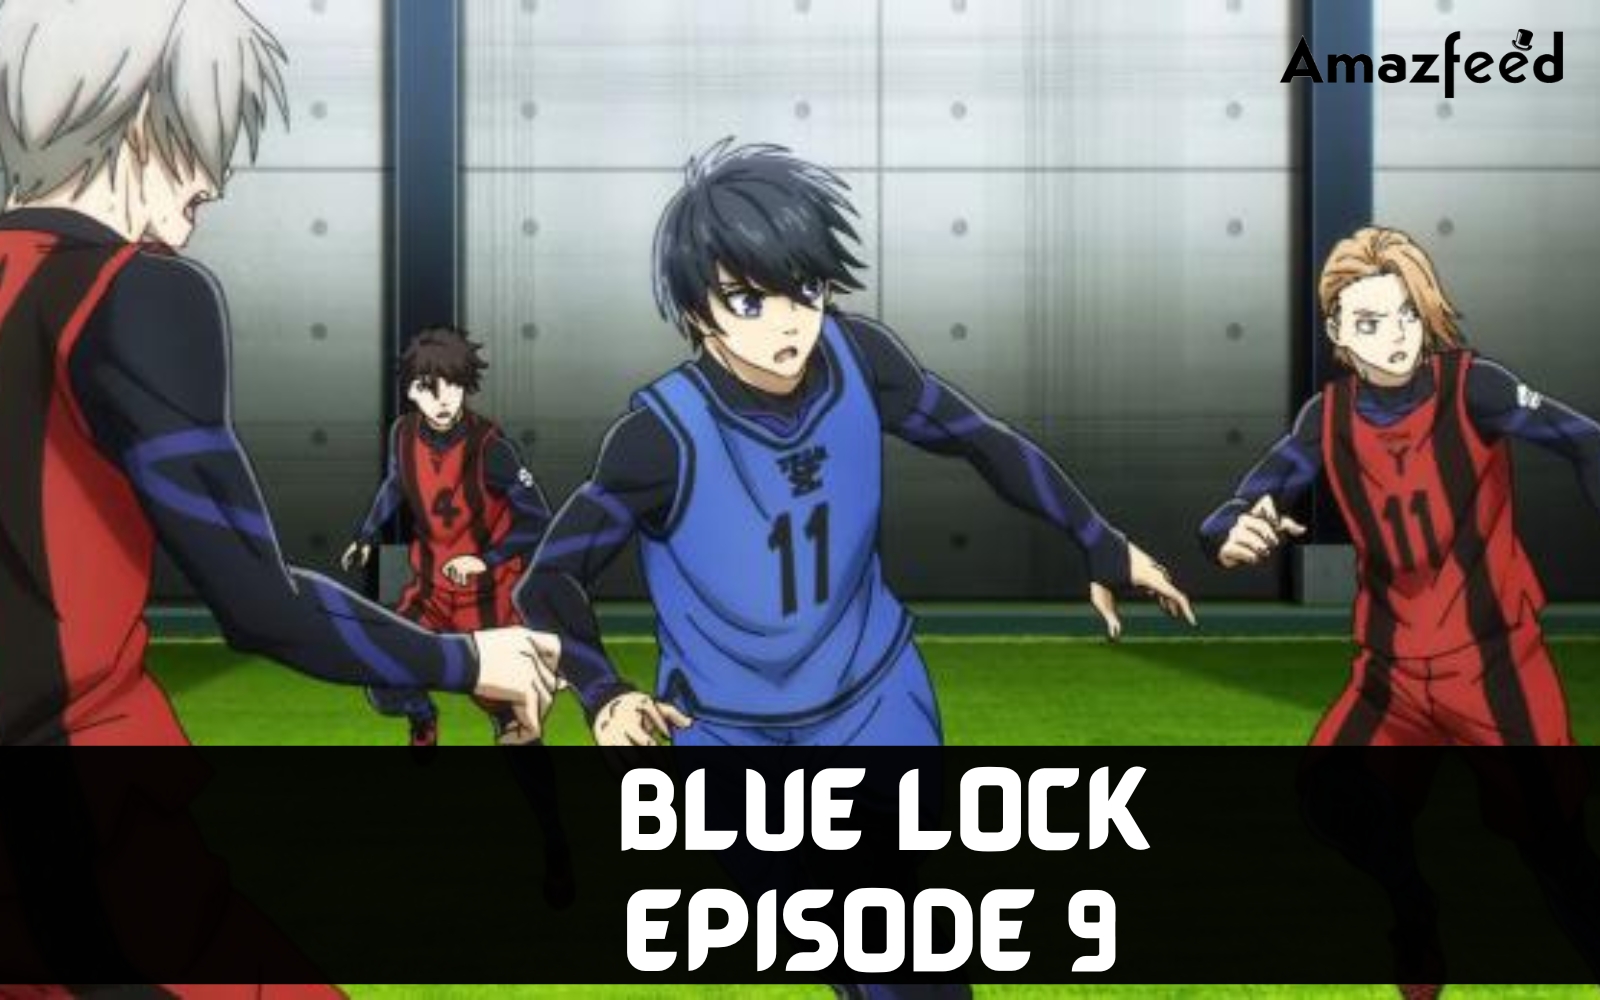 Blue Lock Episode 9